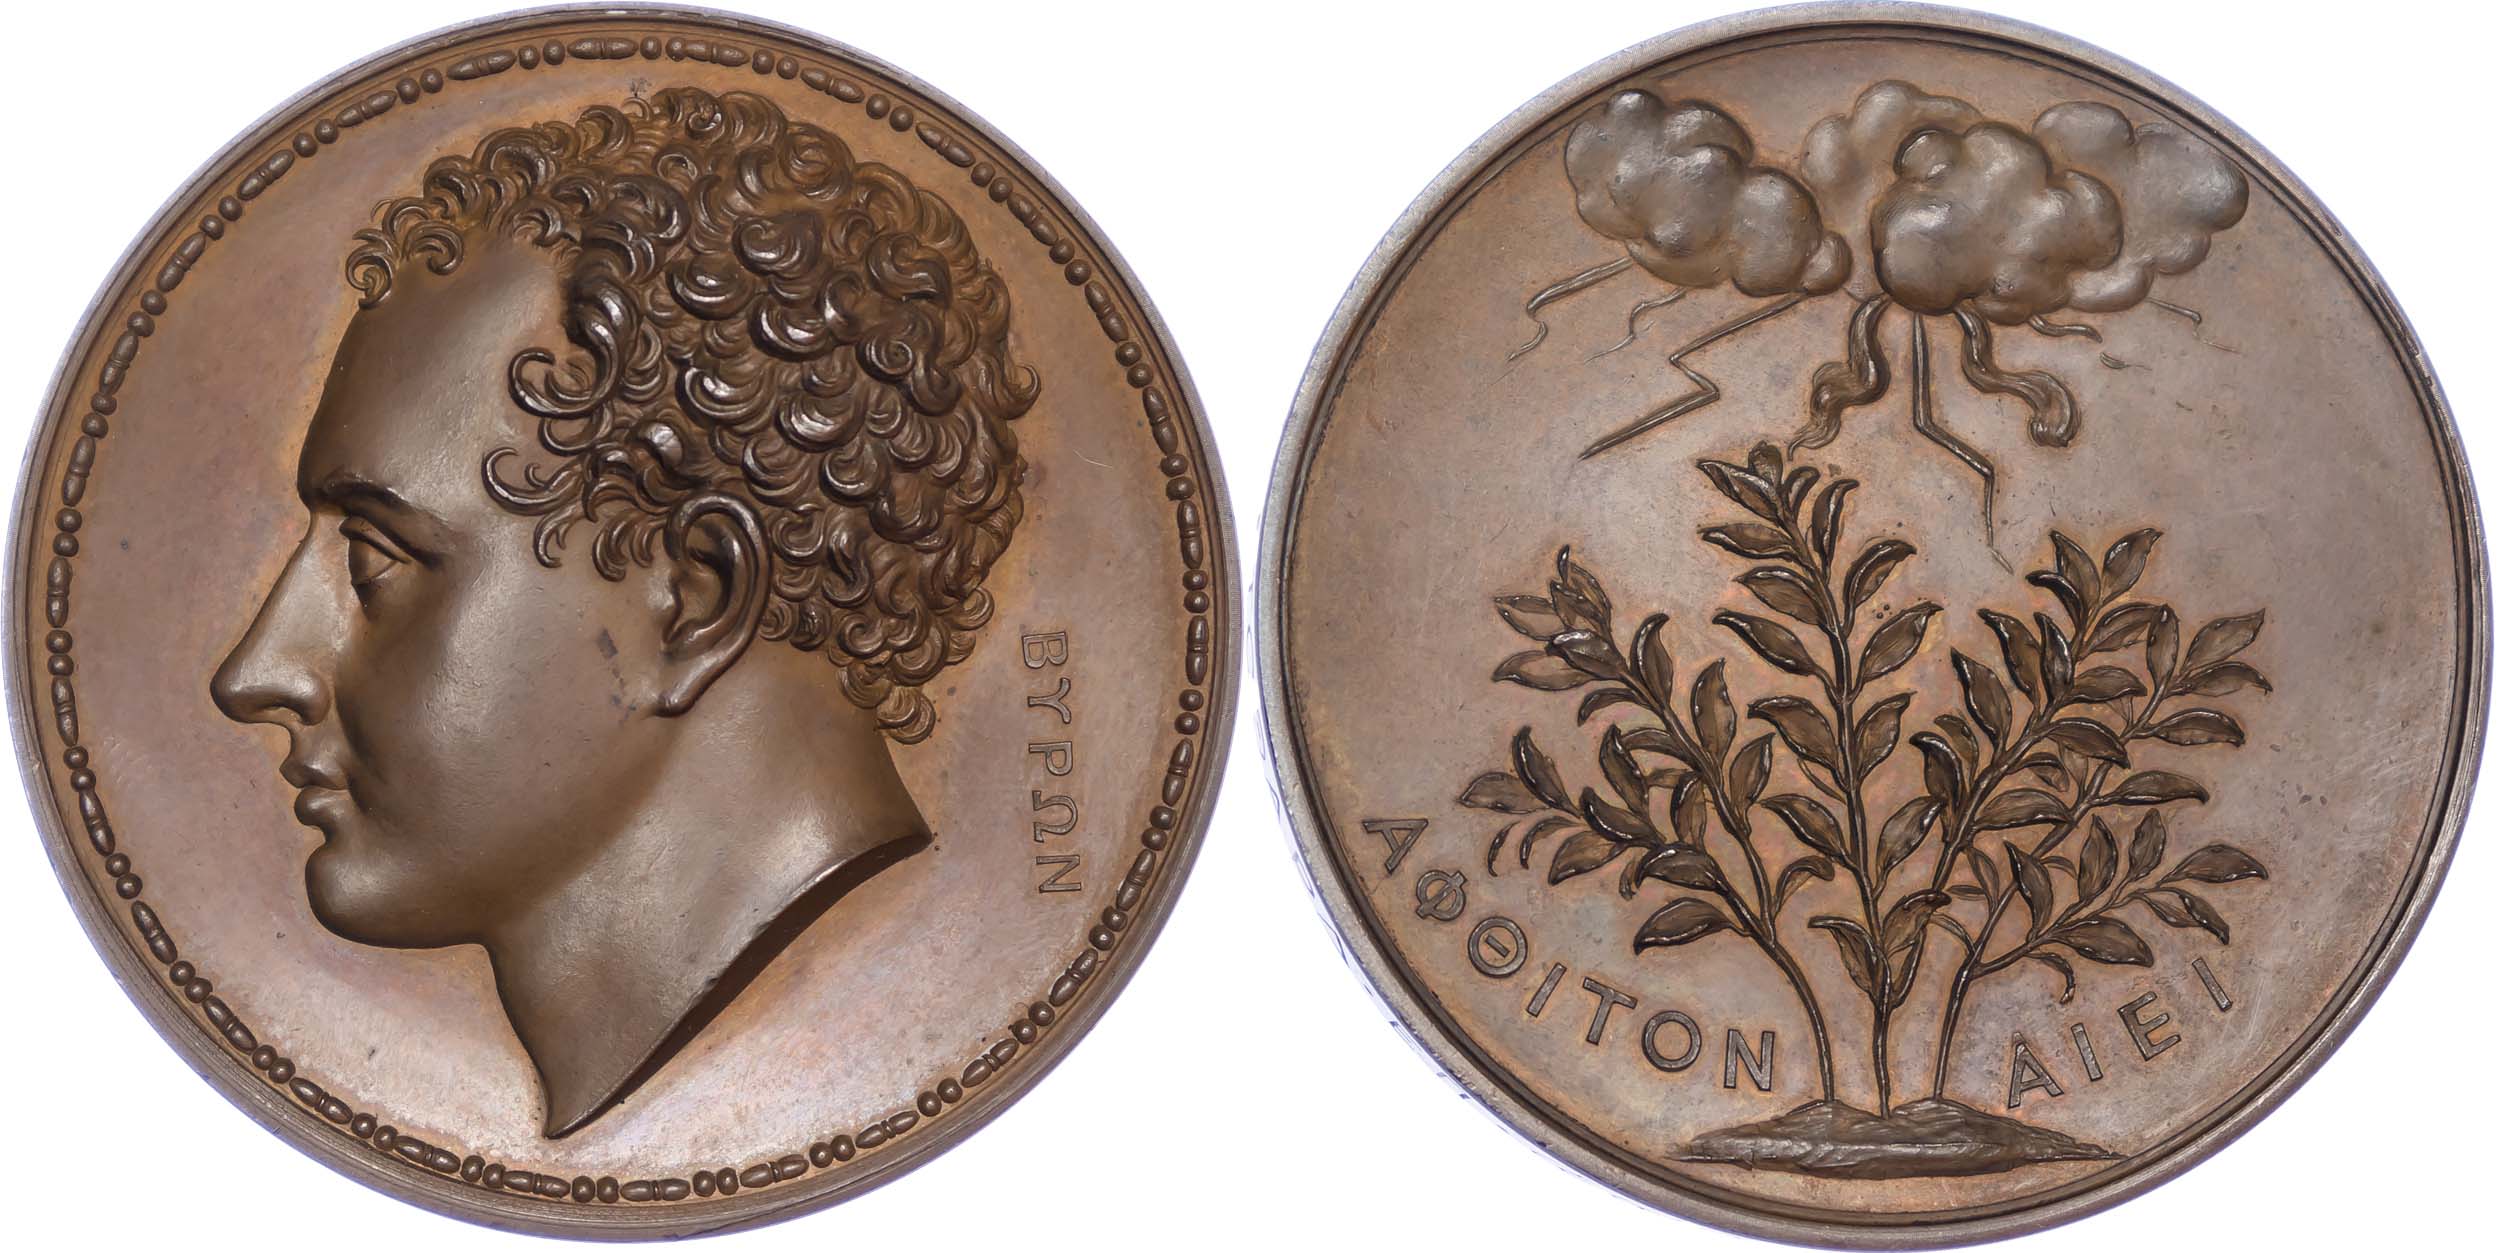 George IV, Death of Lord Byron, 1824, Copper Medal